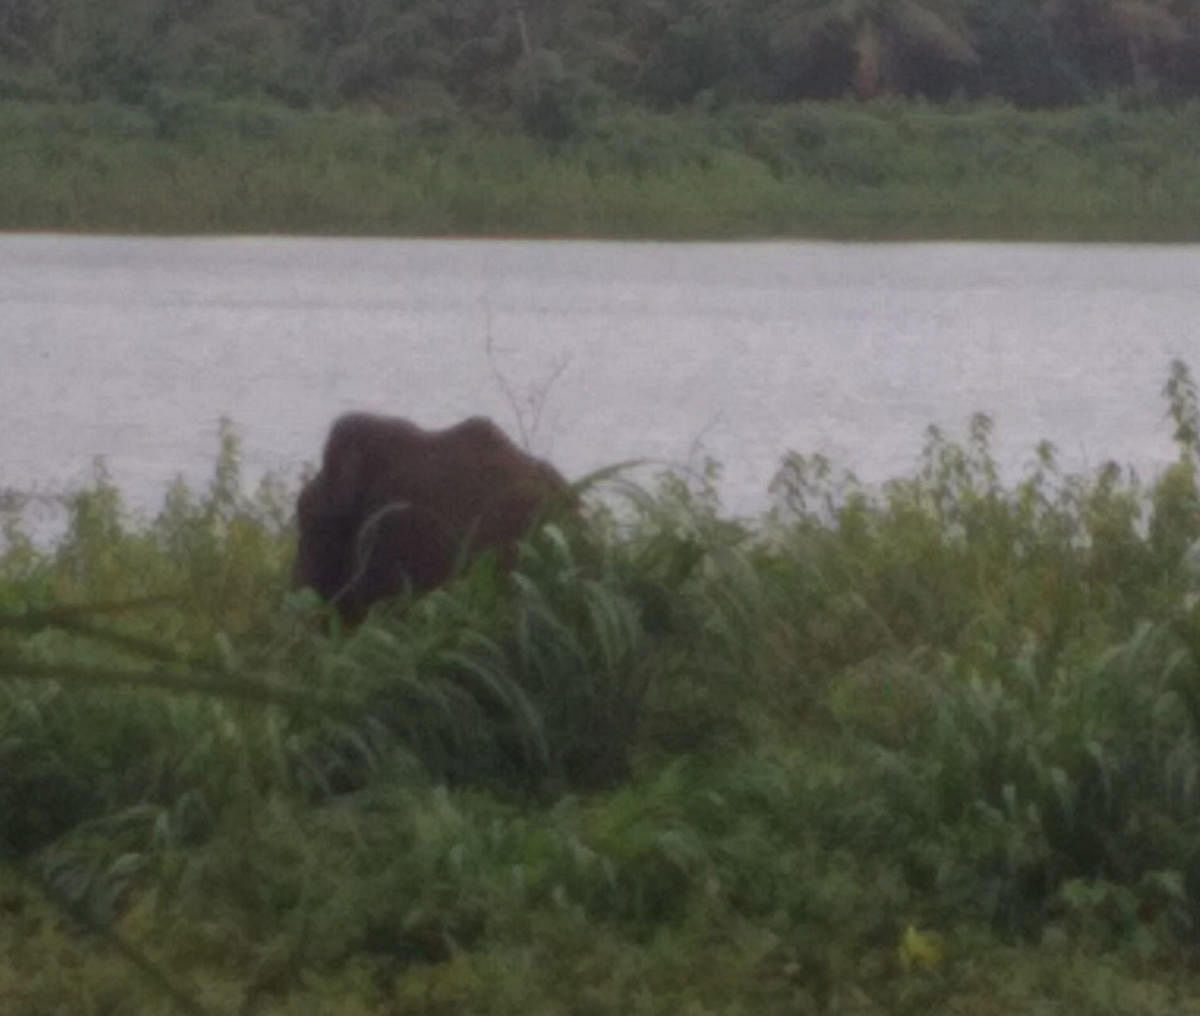 Wild elephant spotted at Hirekaturu